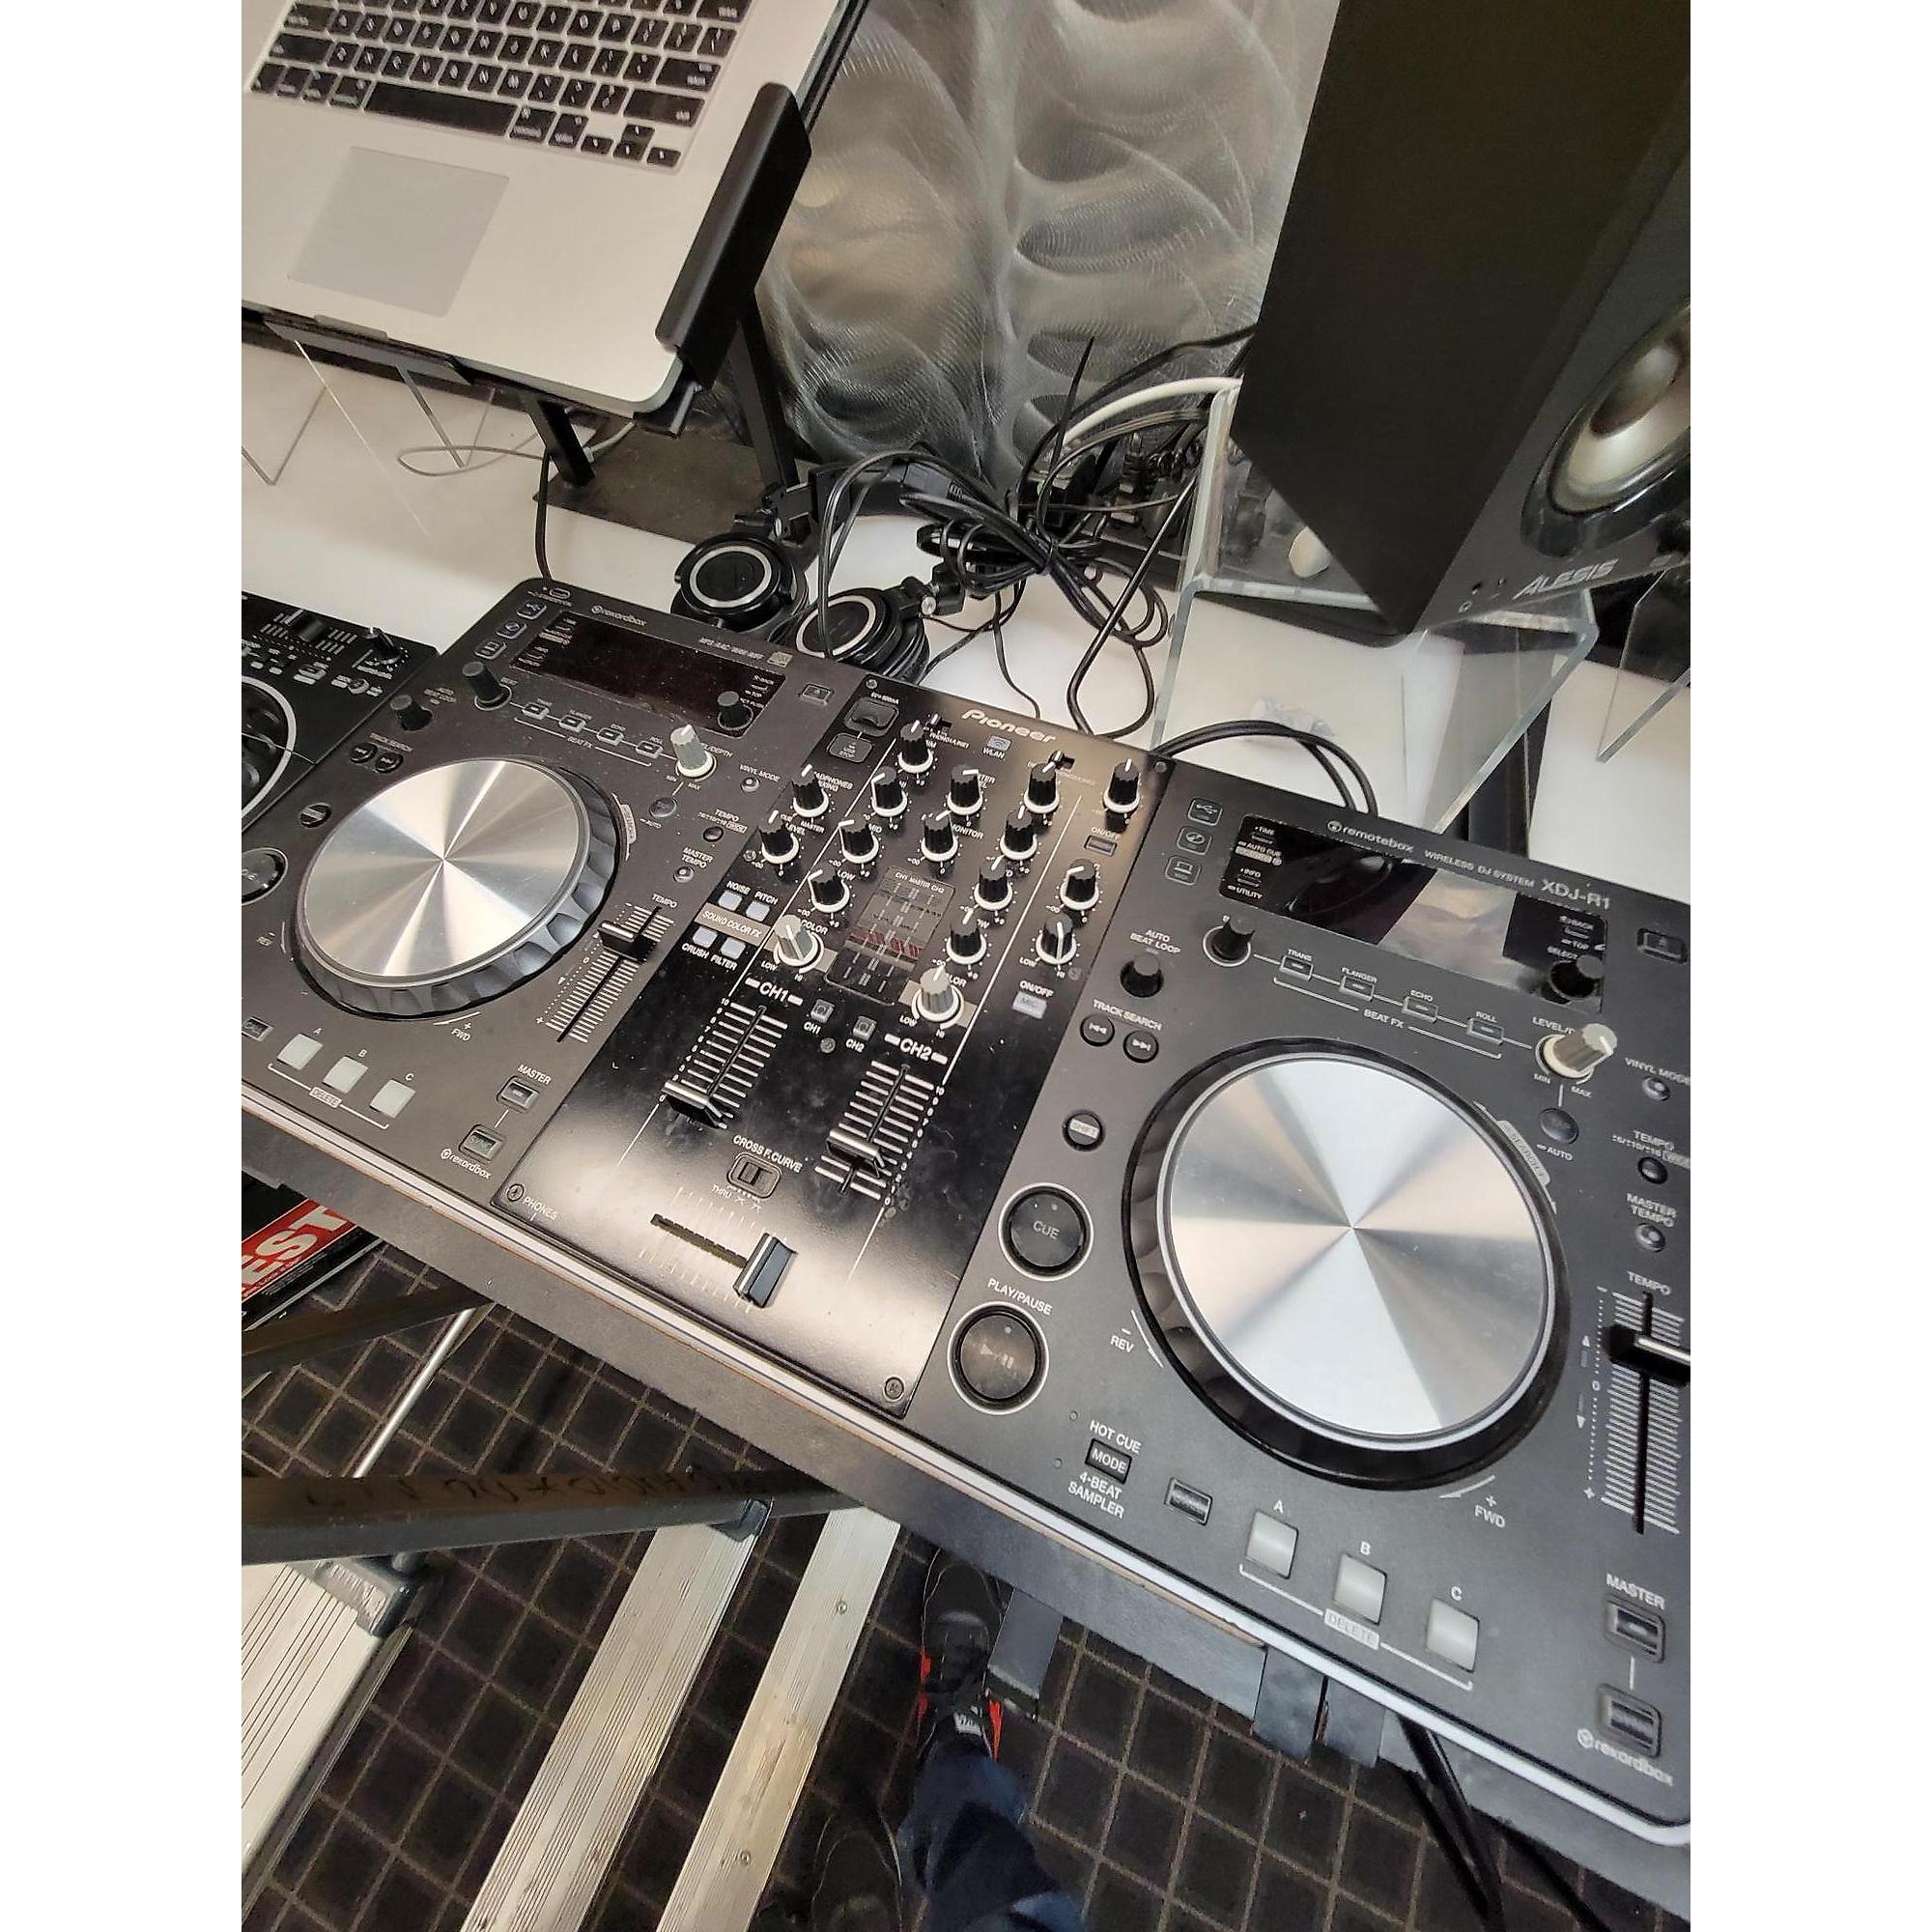 Used Pioneer XDJ-R1 DJ Controller